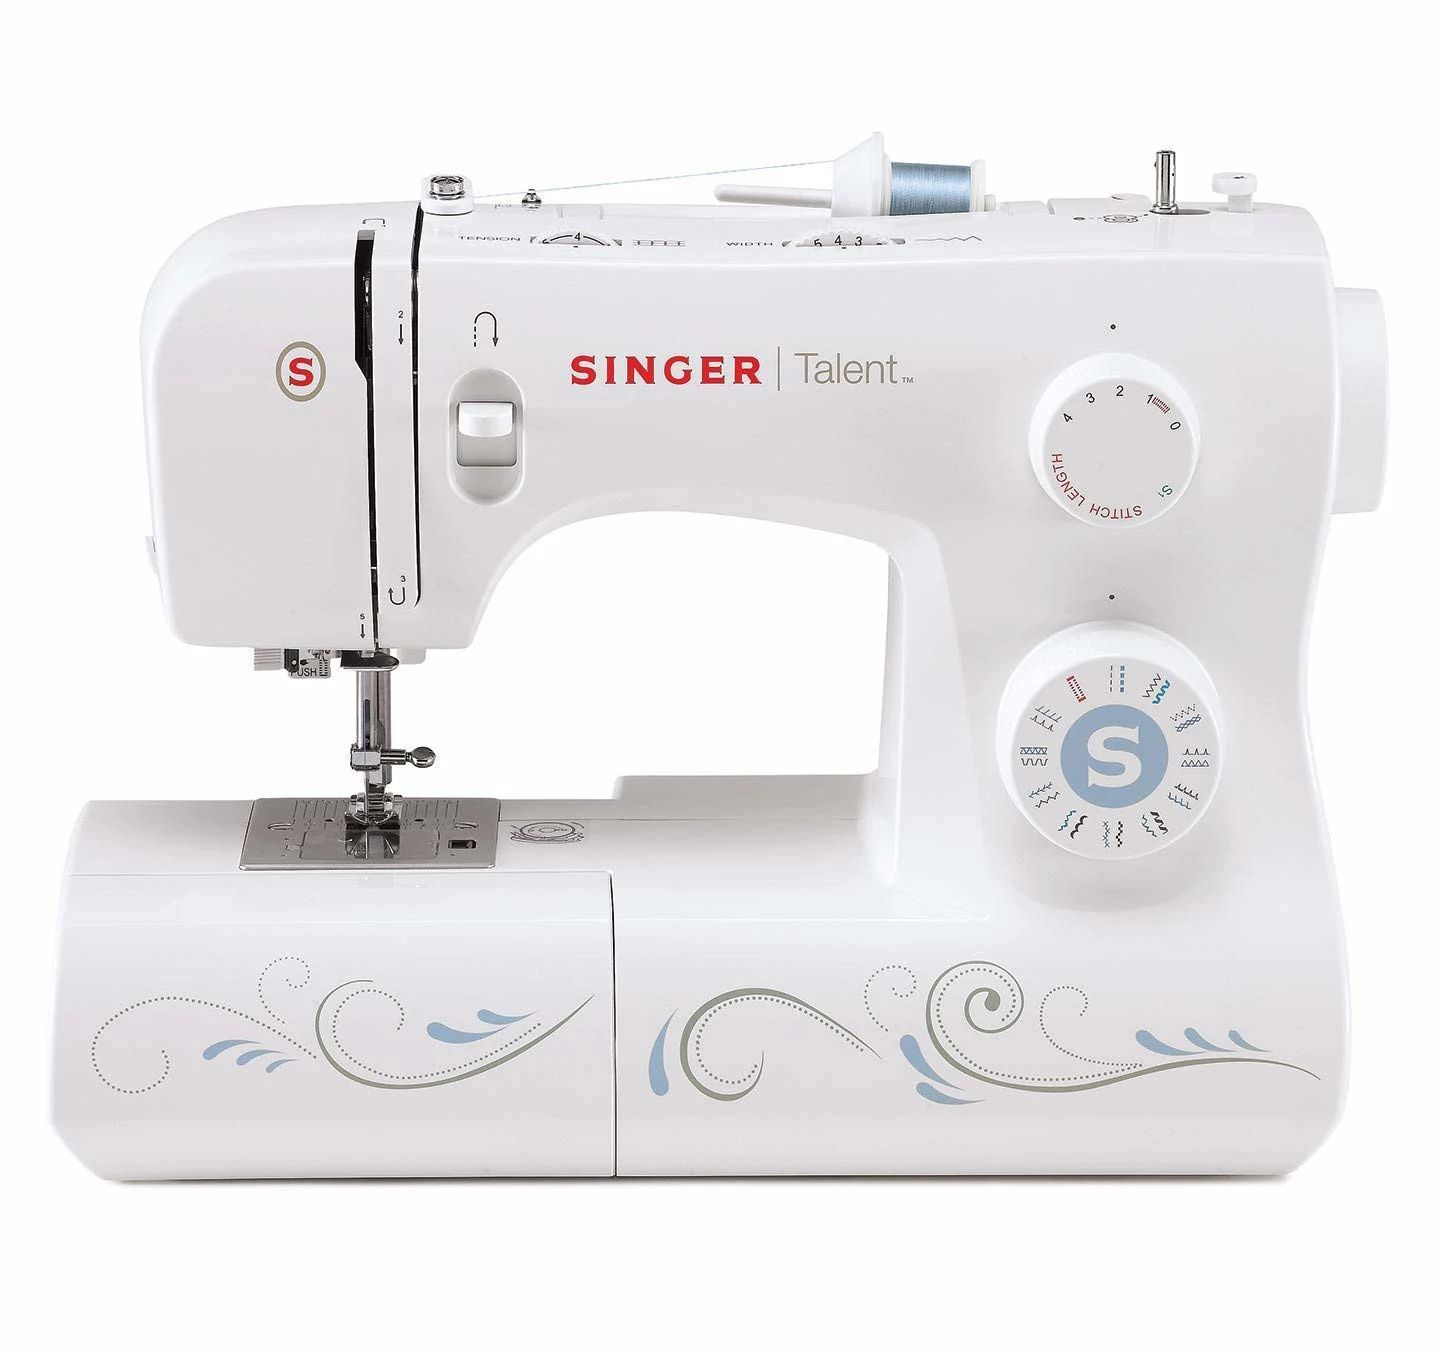 3323 singer talent sewing machine